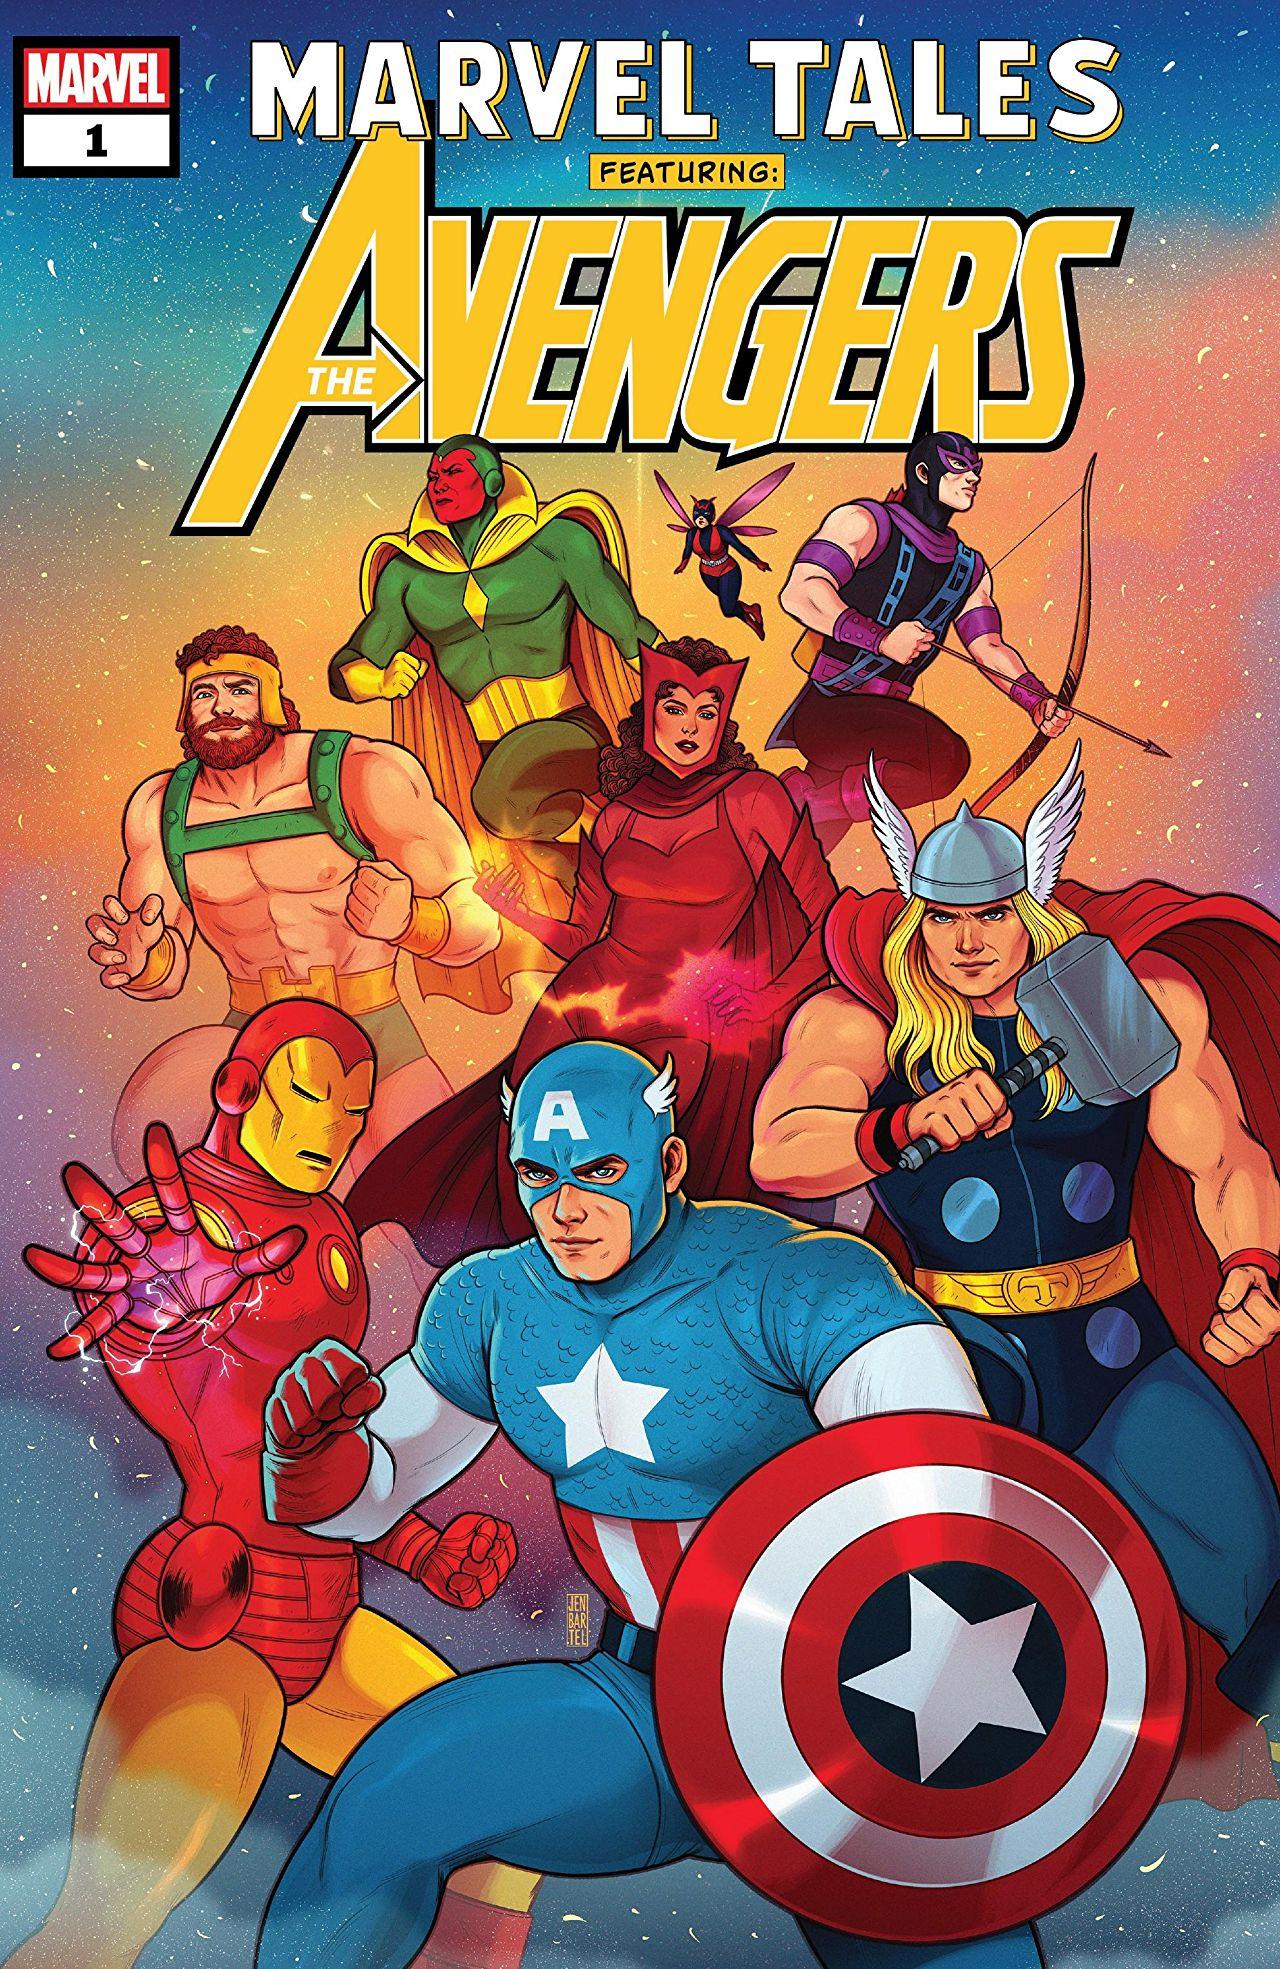 Marvel Tales: Avengers Vol. 1 #1